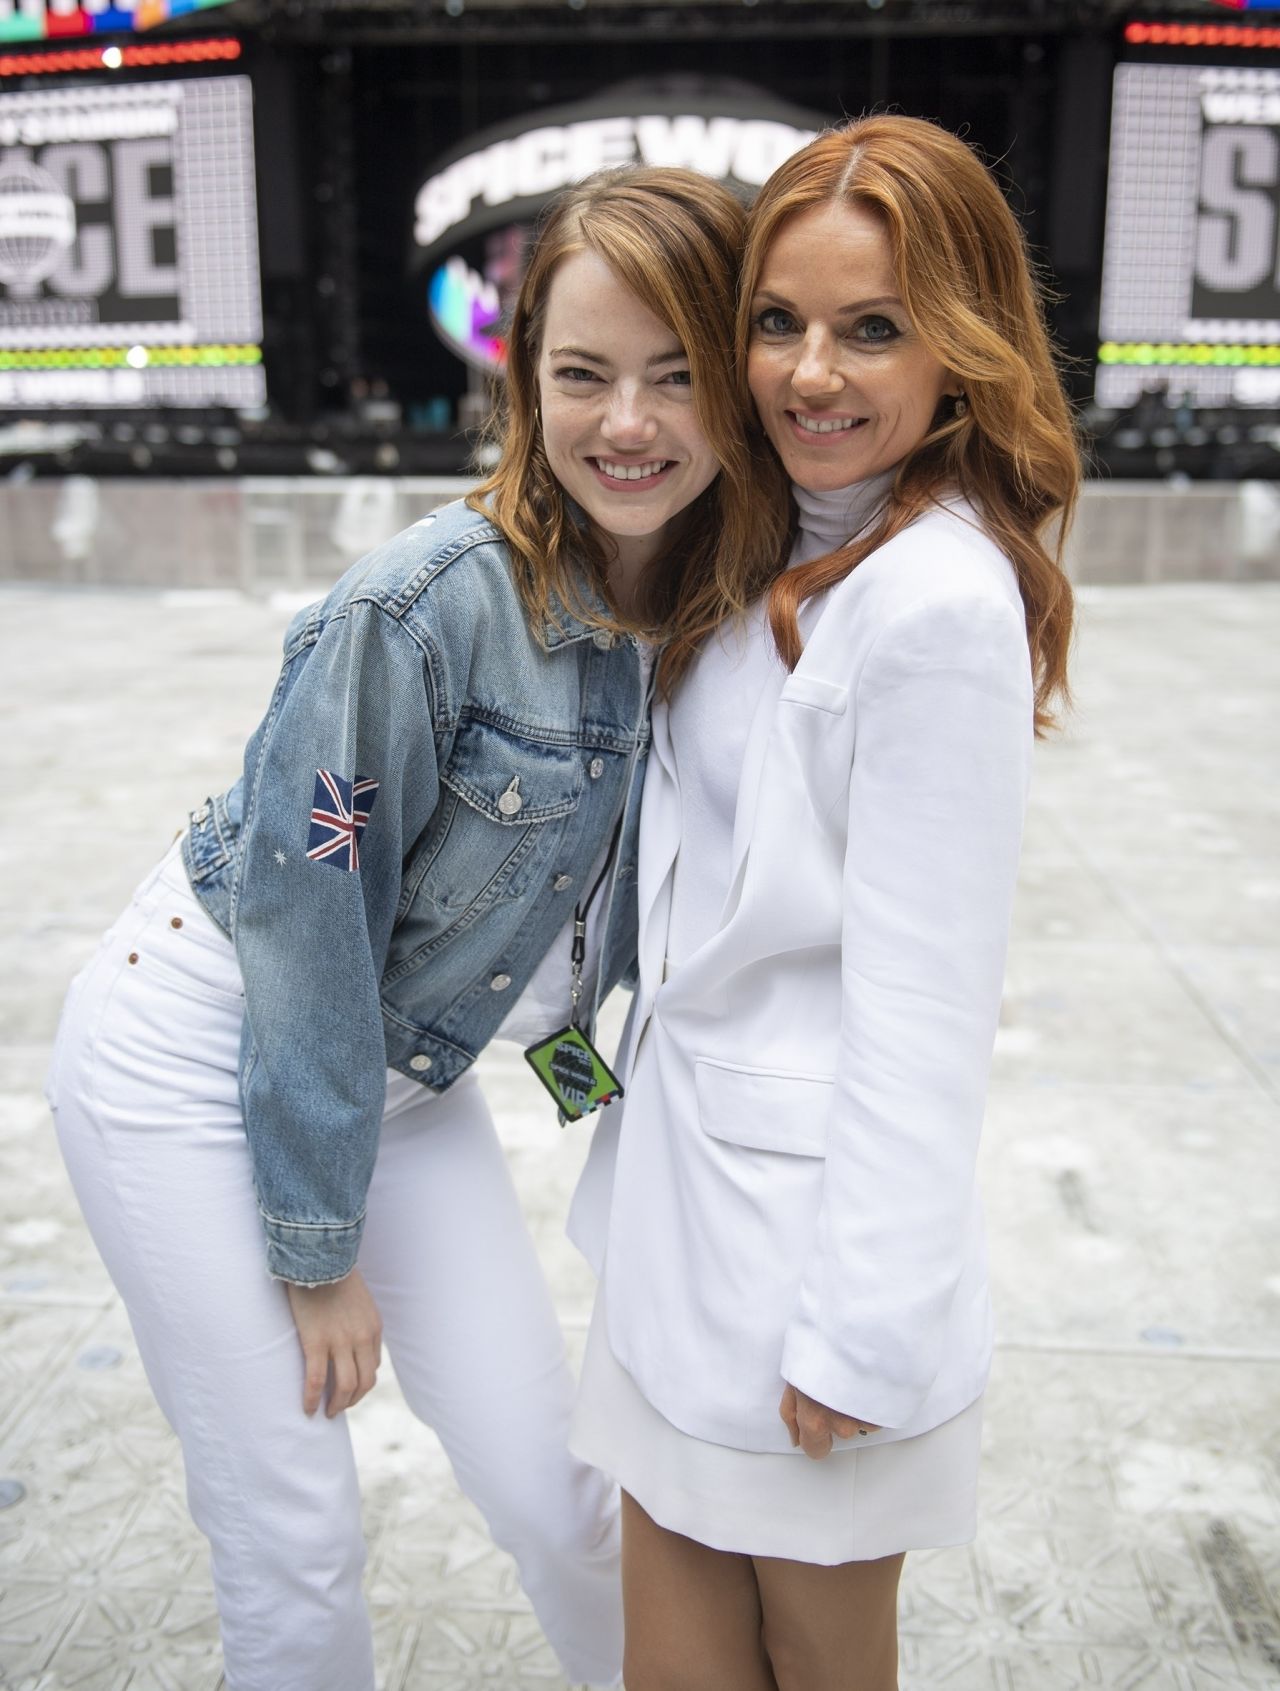 Emma Stone Spice Girls Concert In London 06 13 2019 Celebmafia